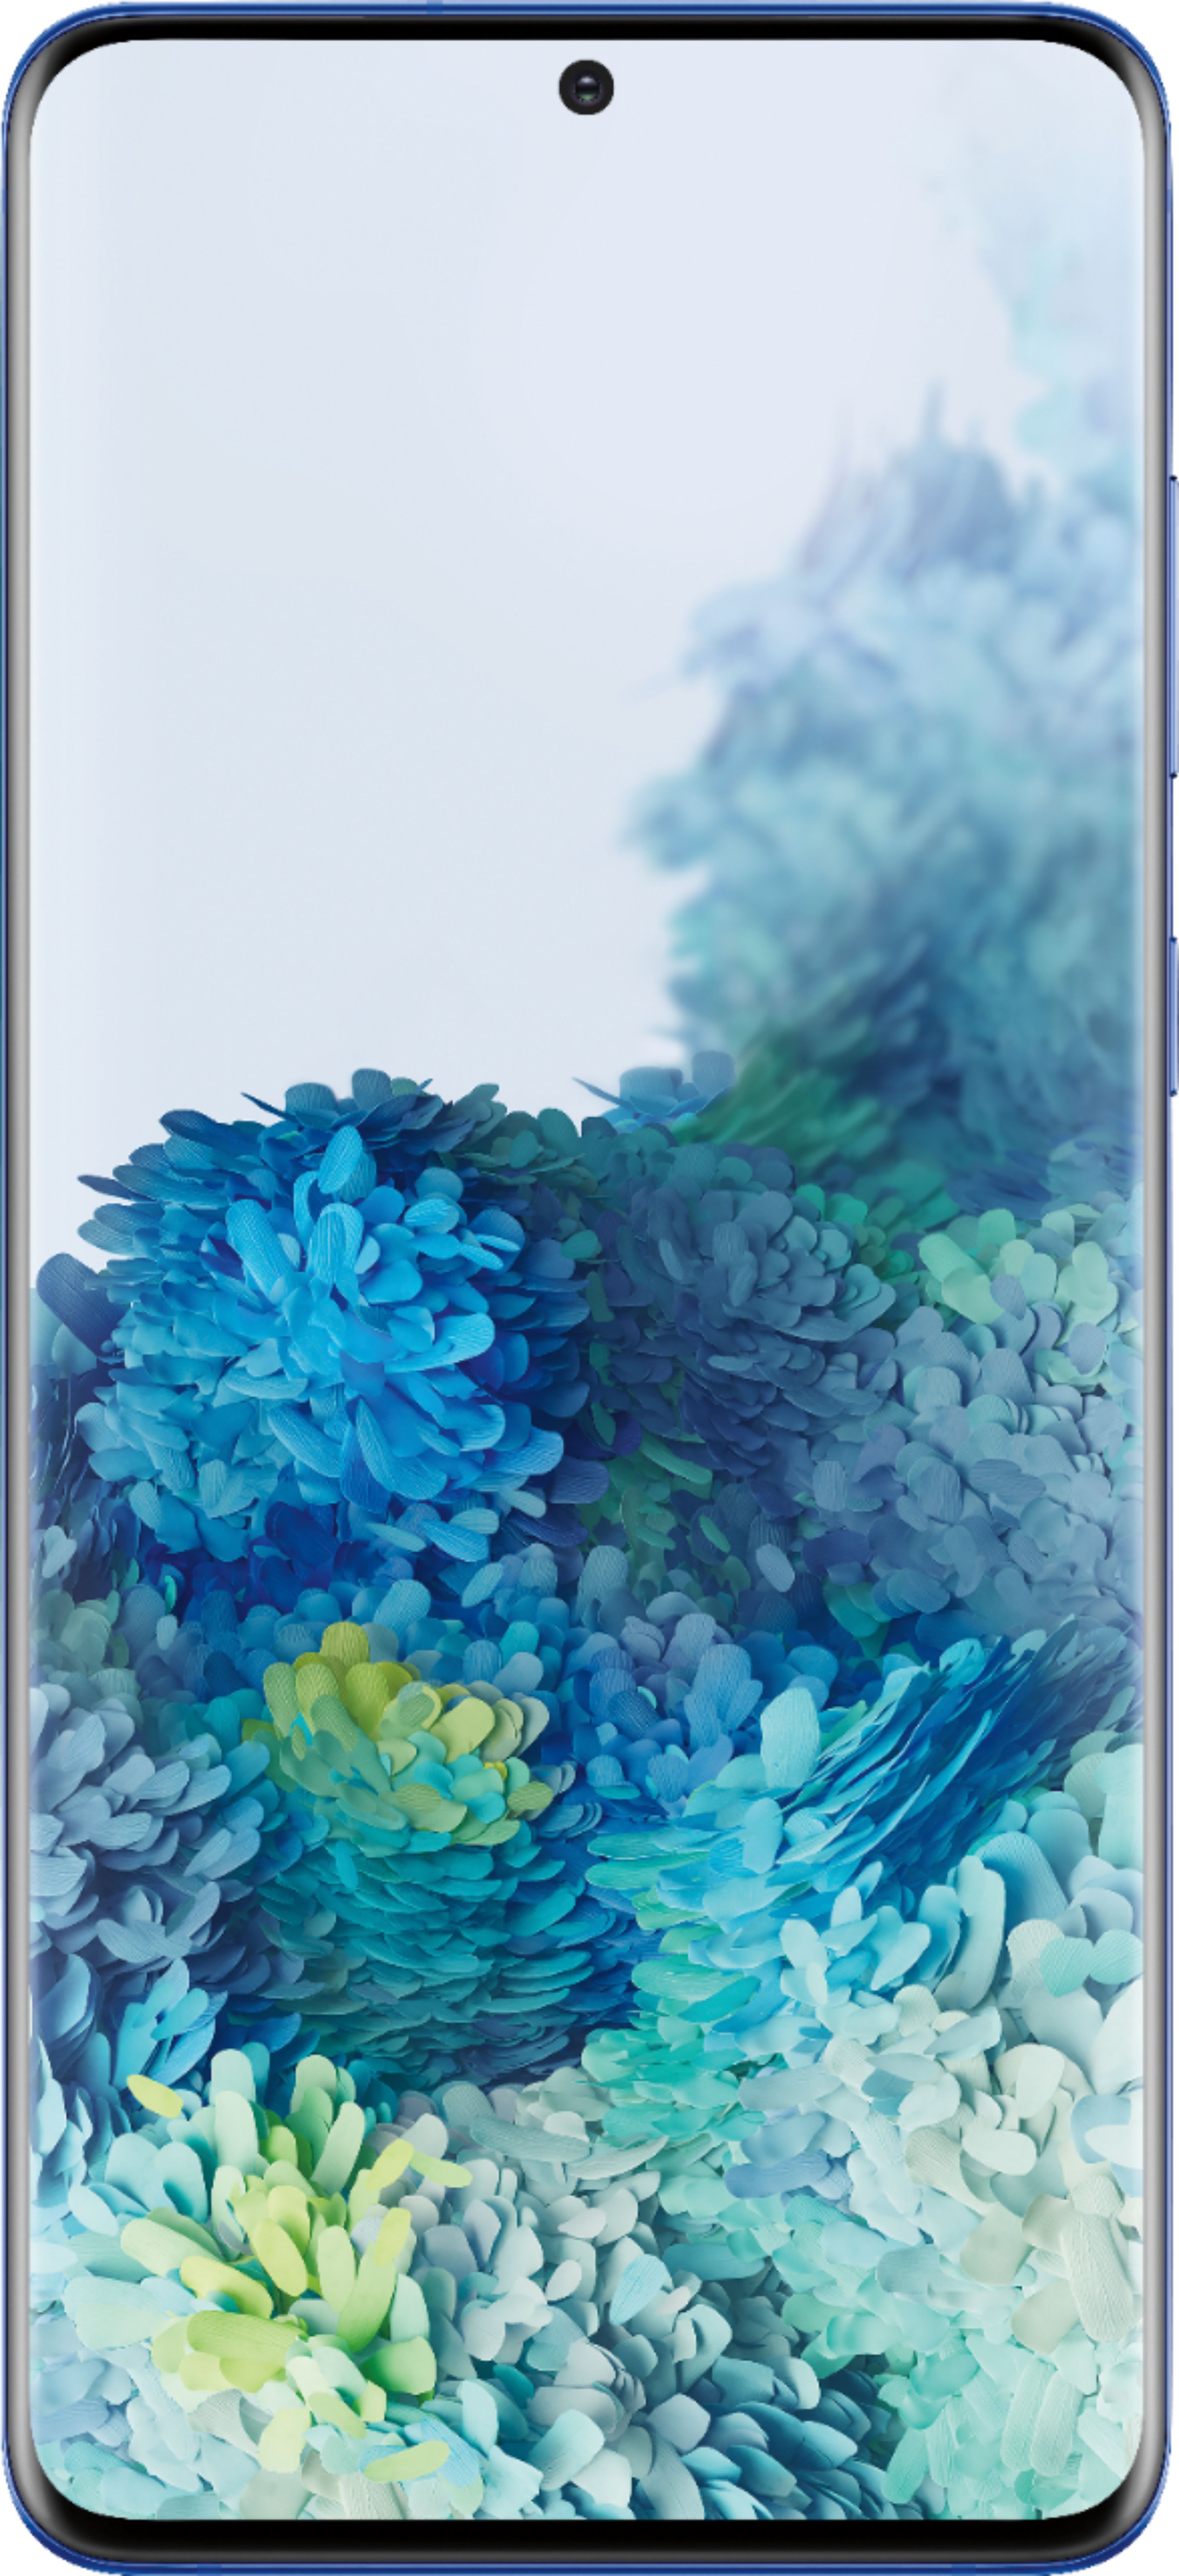  Samsung Galaxy S20+ 5G 128GB Fully Unlocked Smartphone  (Renewed) : Cell Phones & Accessories